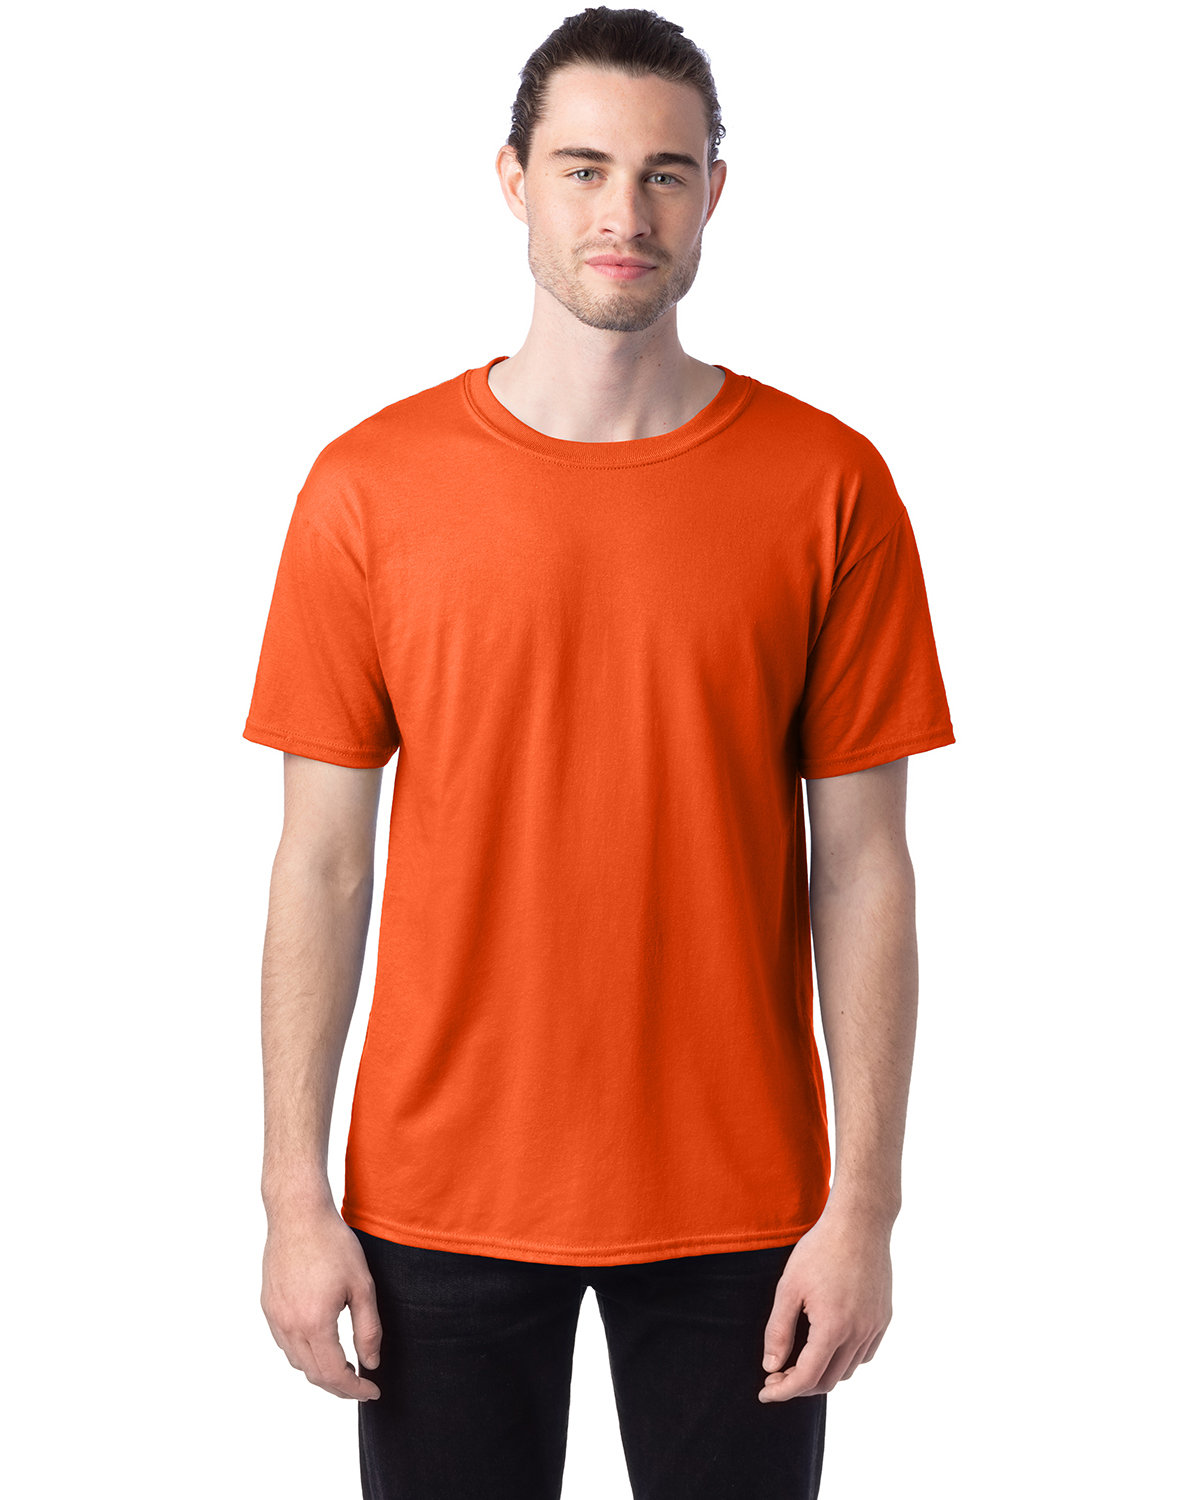 Hanes Unisex 50/50 T-Shirt ORANGE 